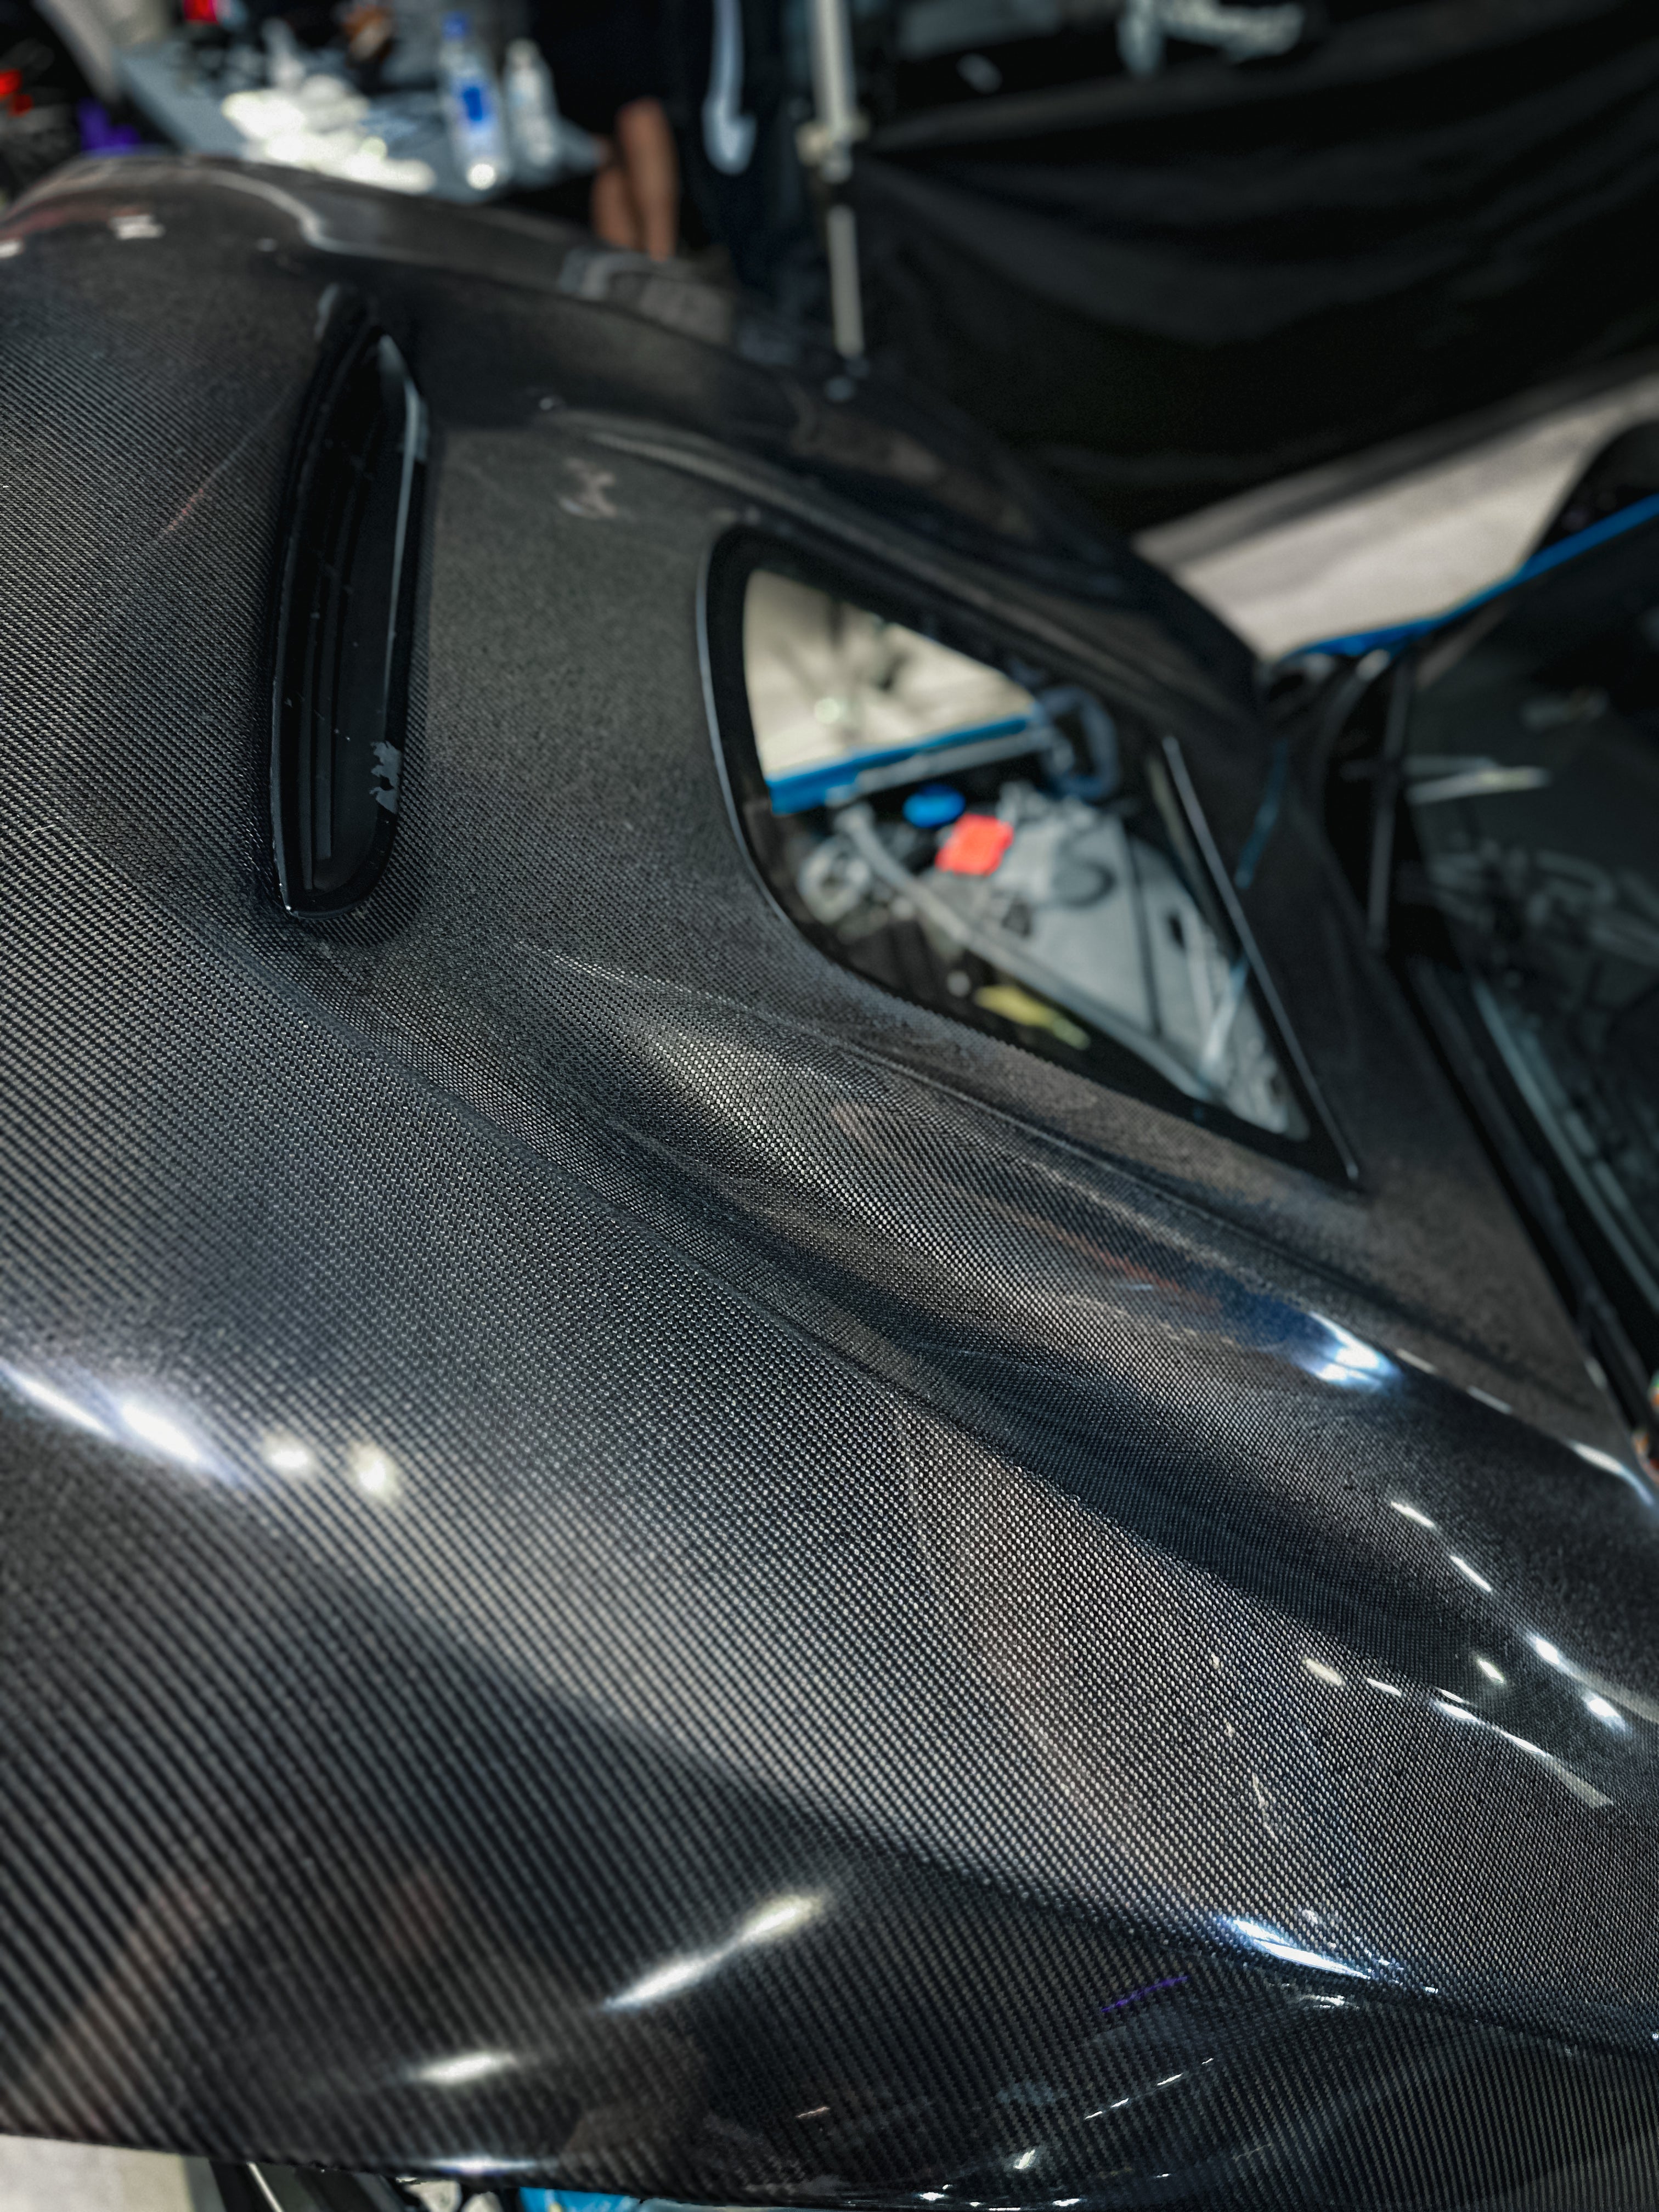 CMST Carbon Fiber Tempered Glass Transparent Hood For BMW M2 / M2C F87 2 Series F22 2014-ON